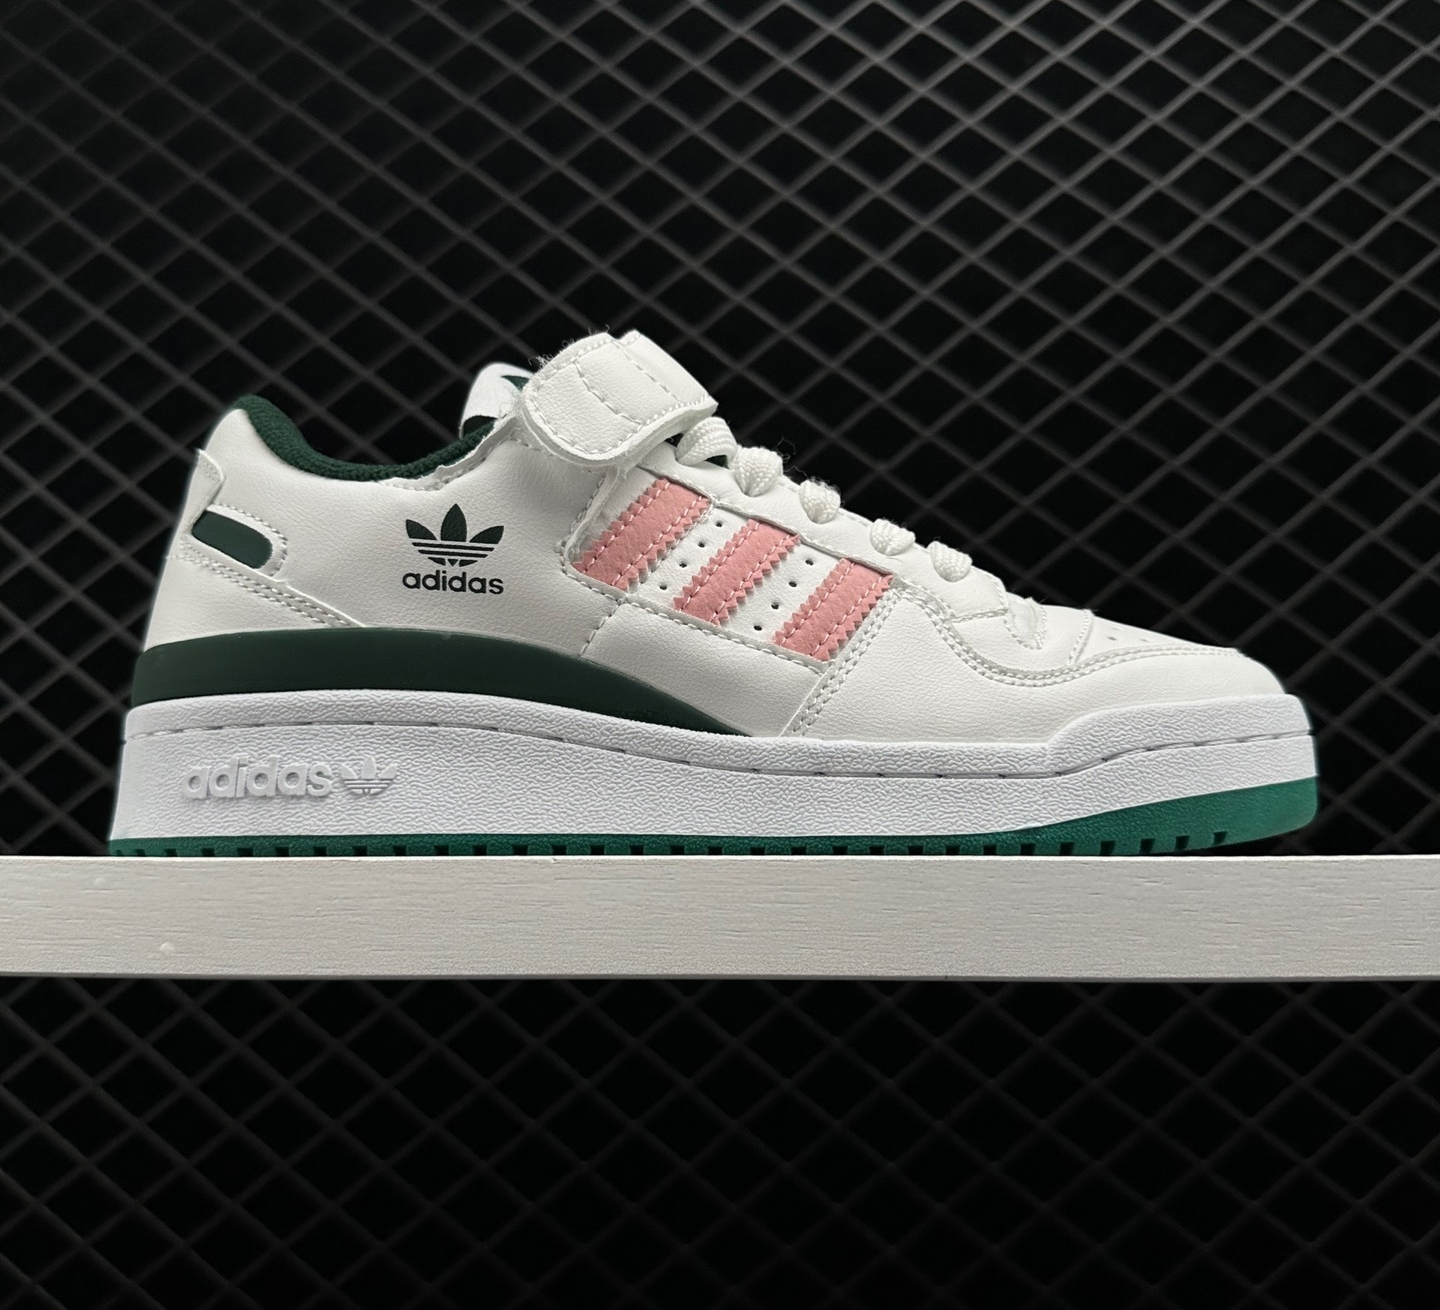 Adidas Originals Forum Low 84 in White/Green/Pink | H01671